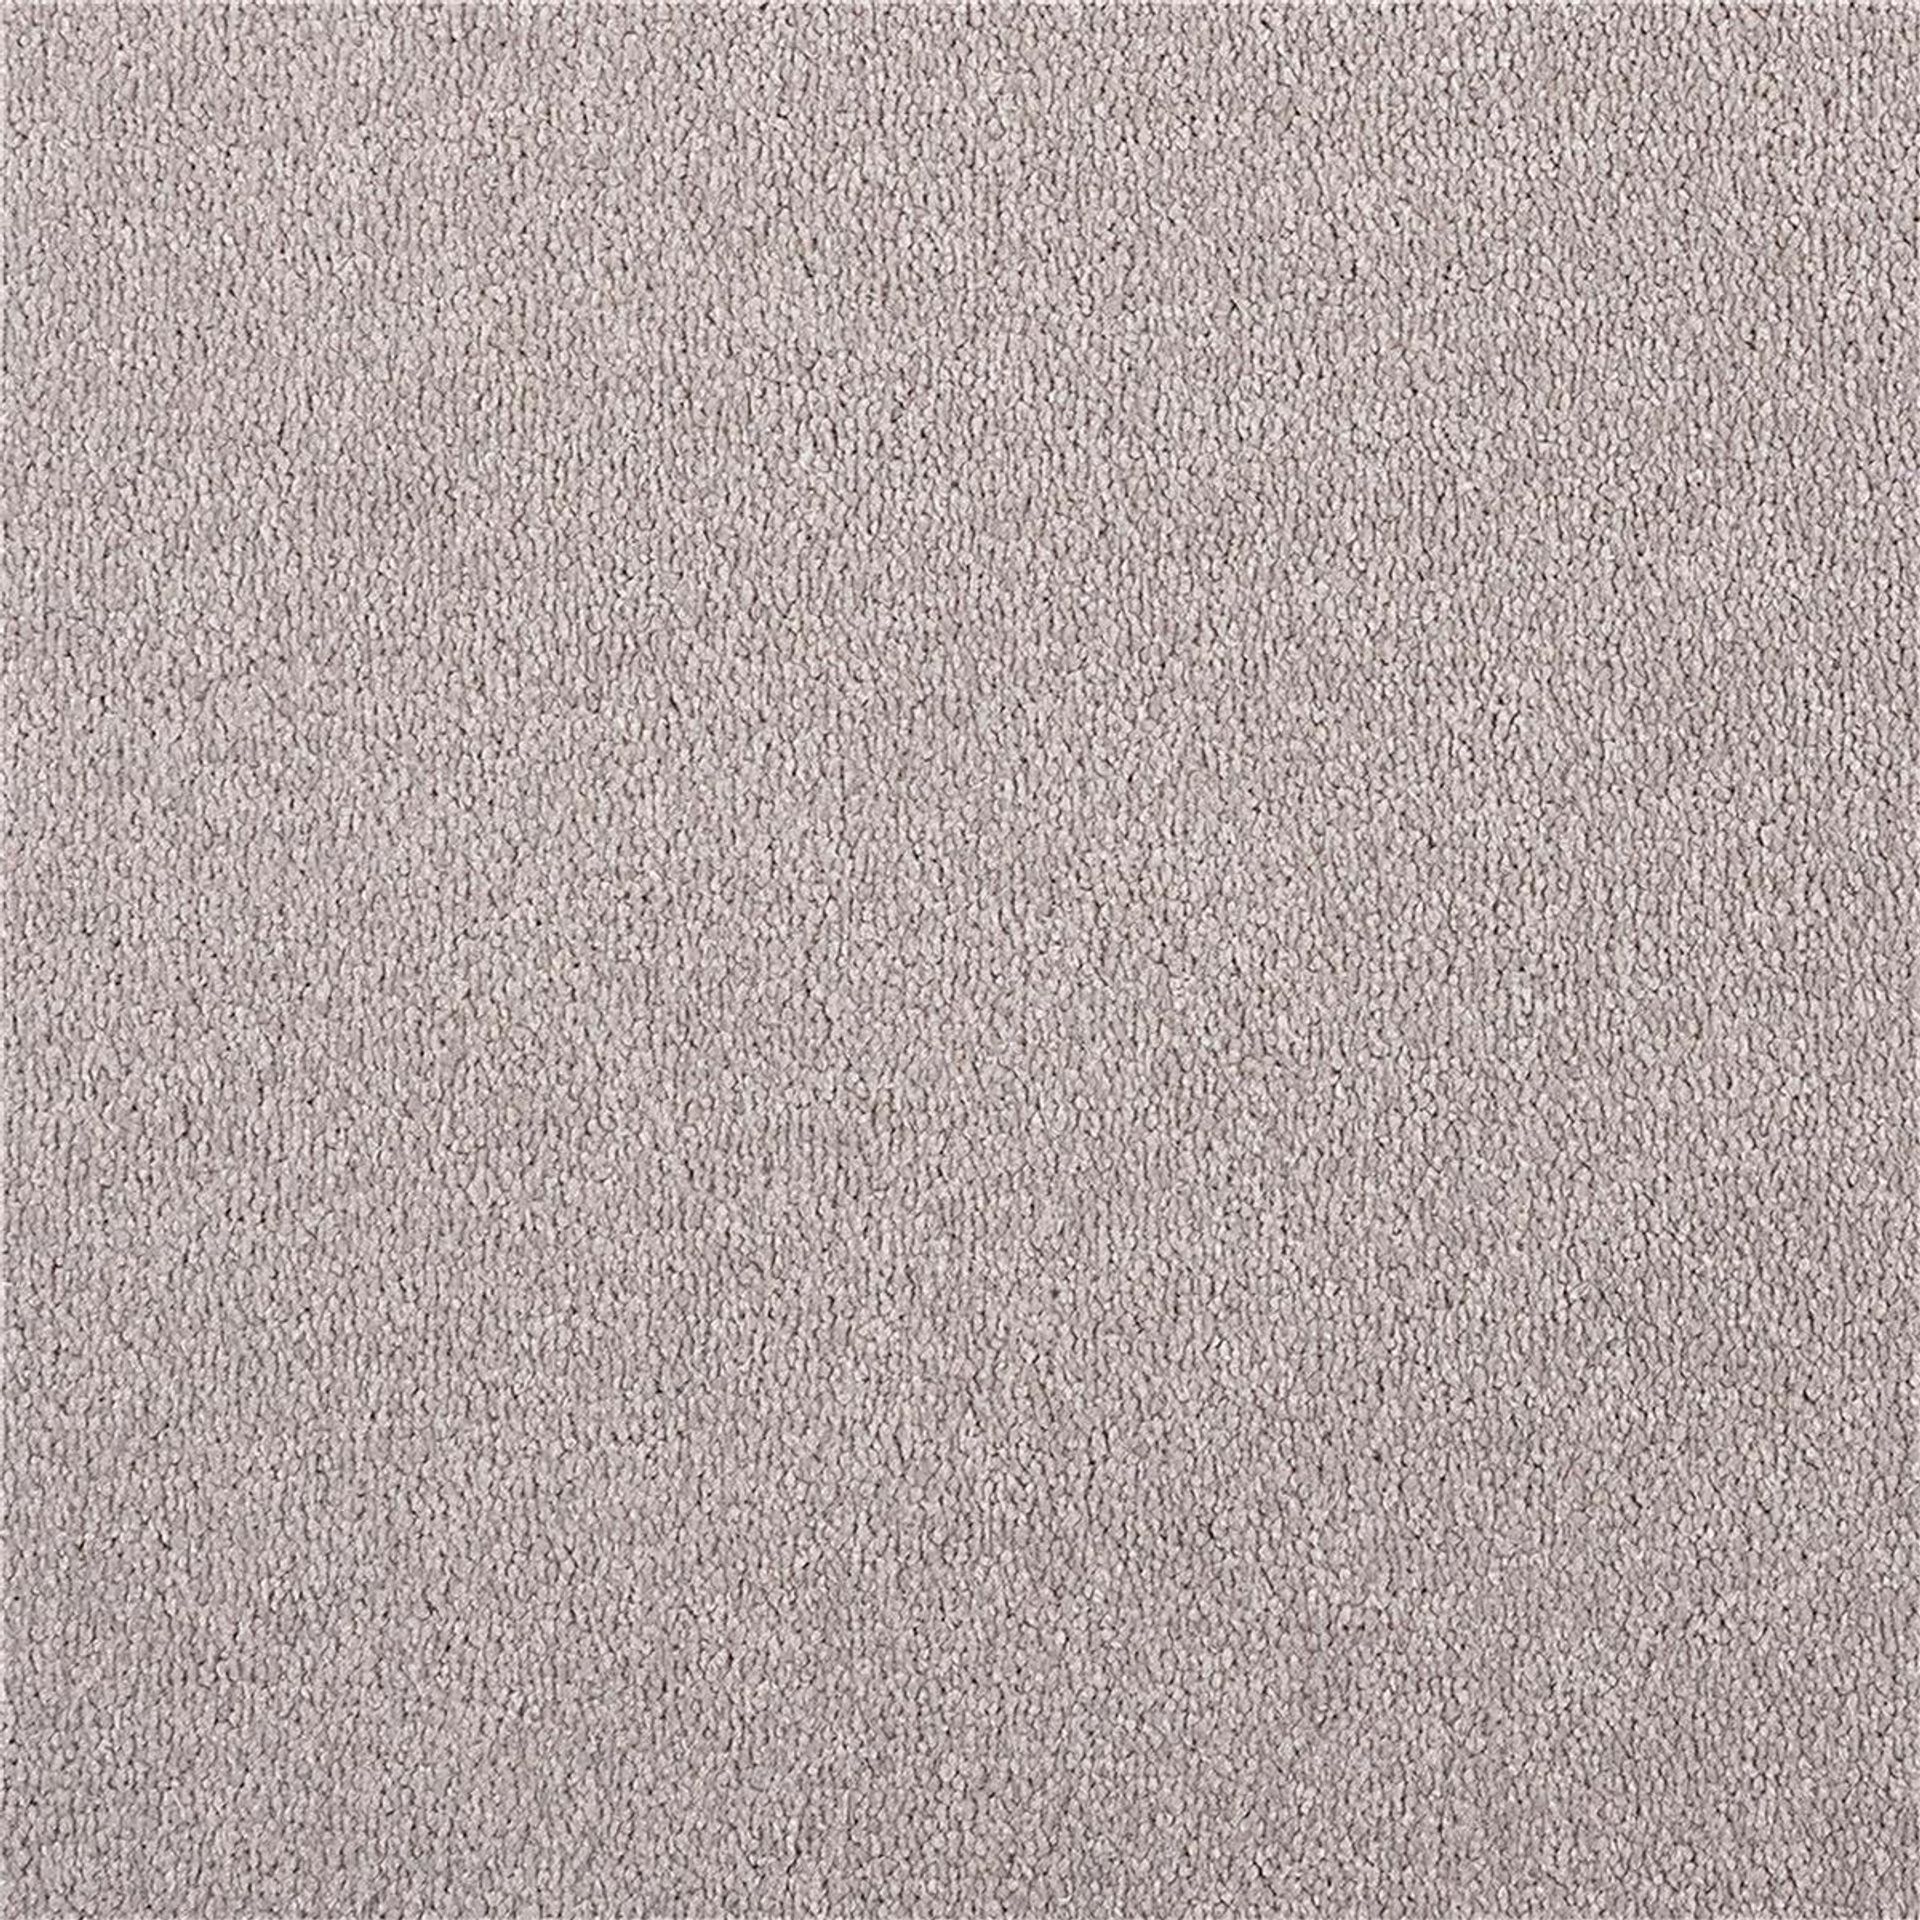 Teppichboden Infloor-Girloon Cotone Velours Grau 521 uni - Rollenbreite 400 cm